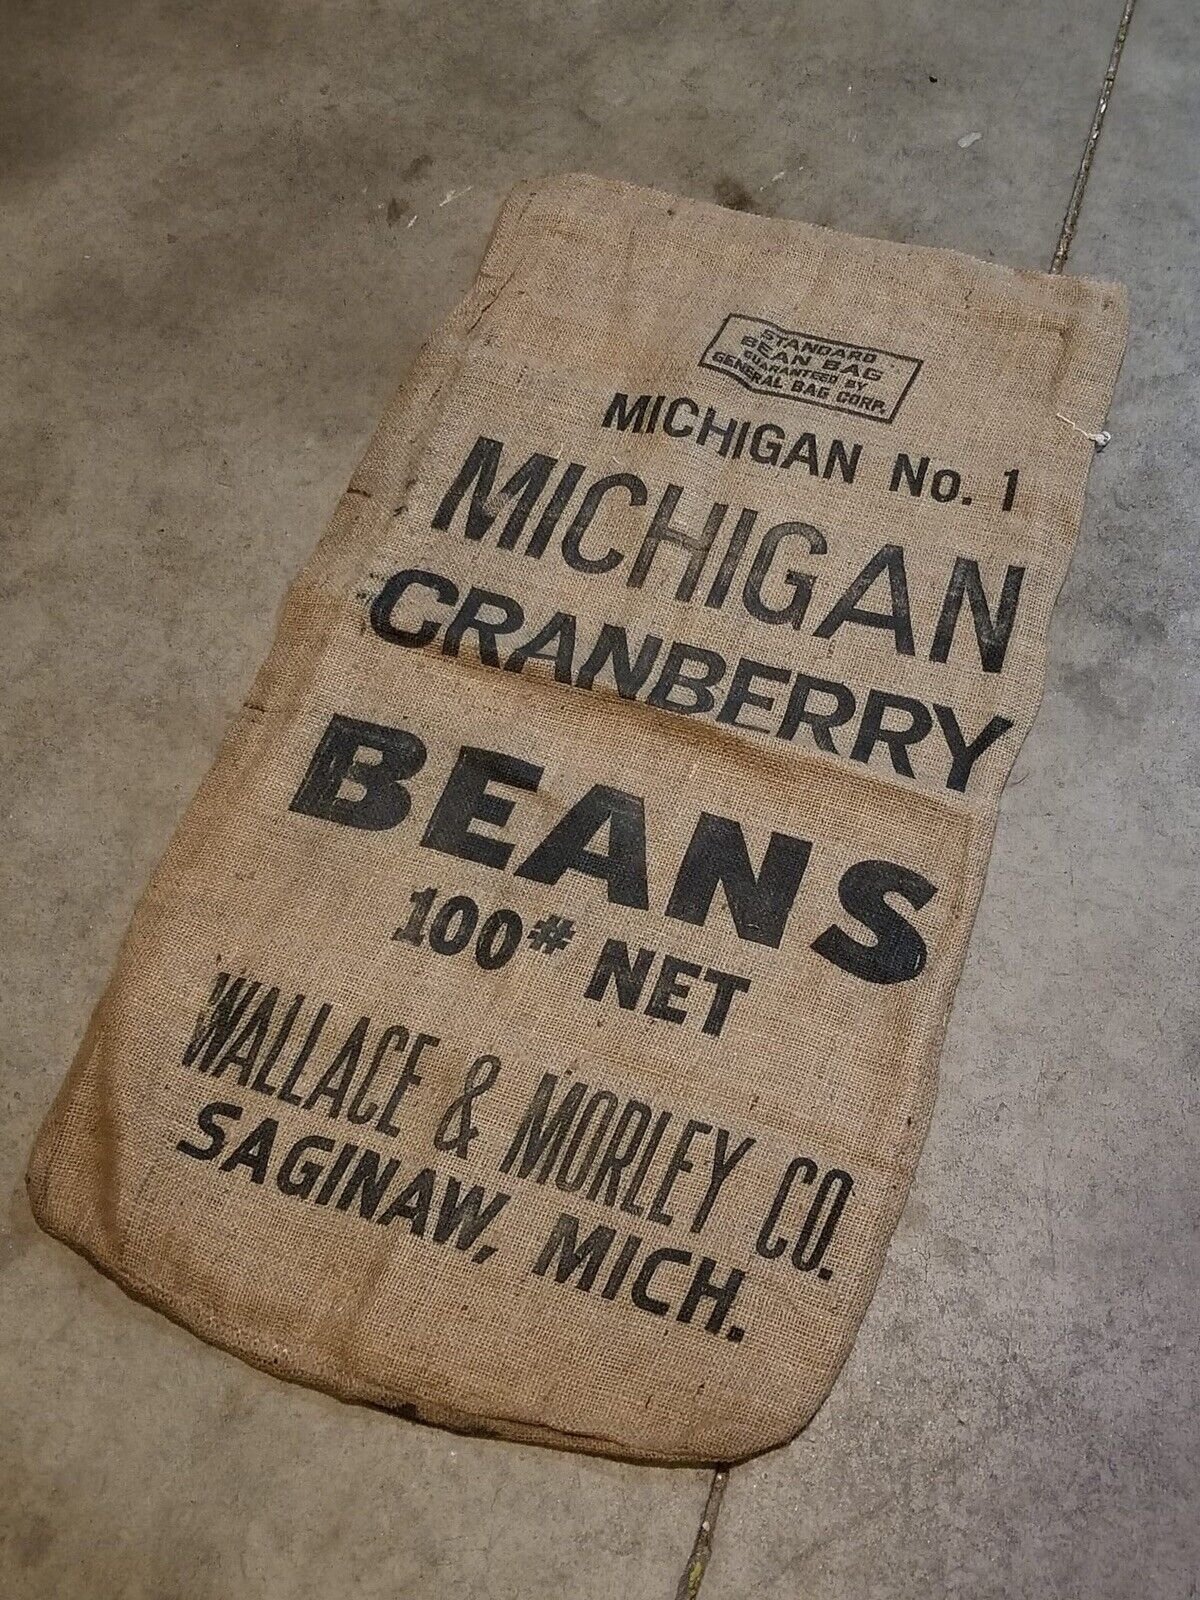 Vintage Michigan Cranberry Bean Burlap Sack, Wallace & Morley Co. Decor